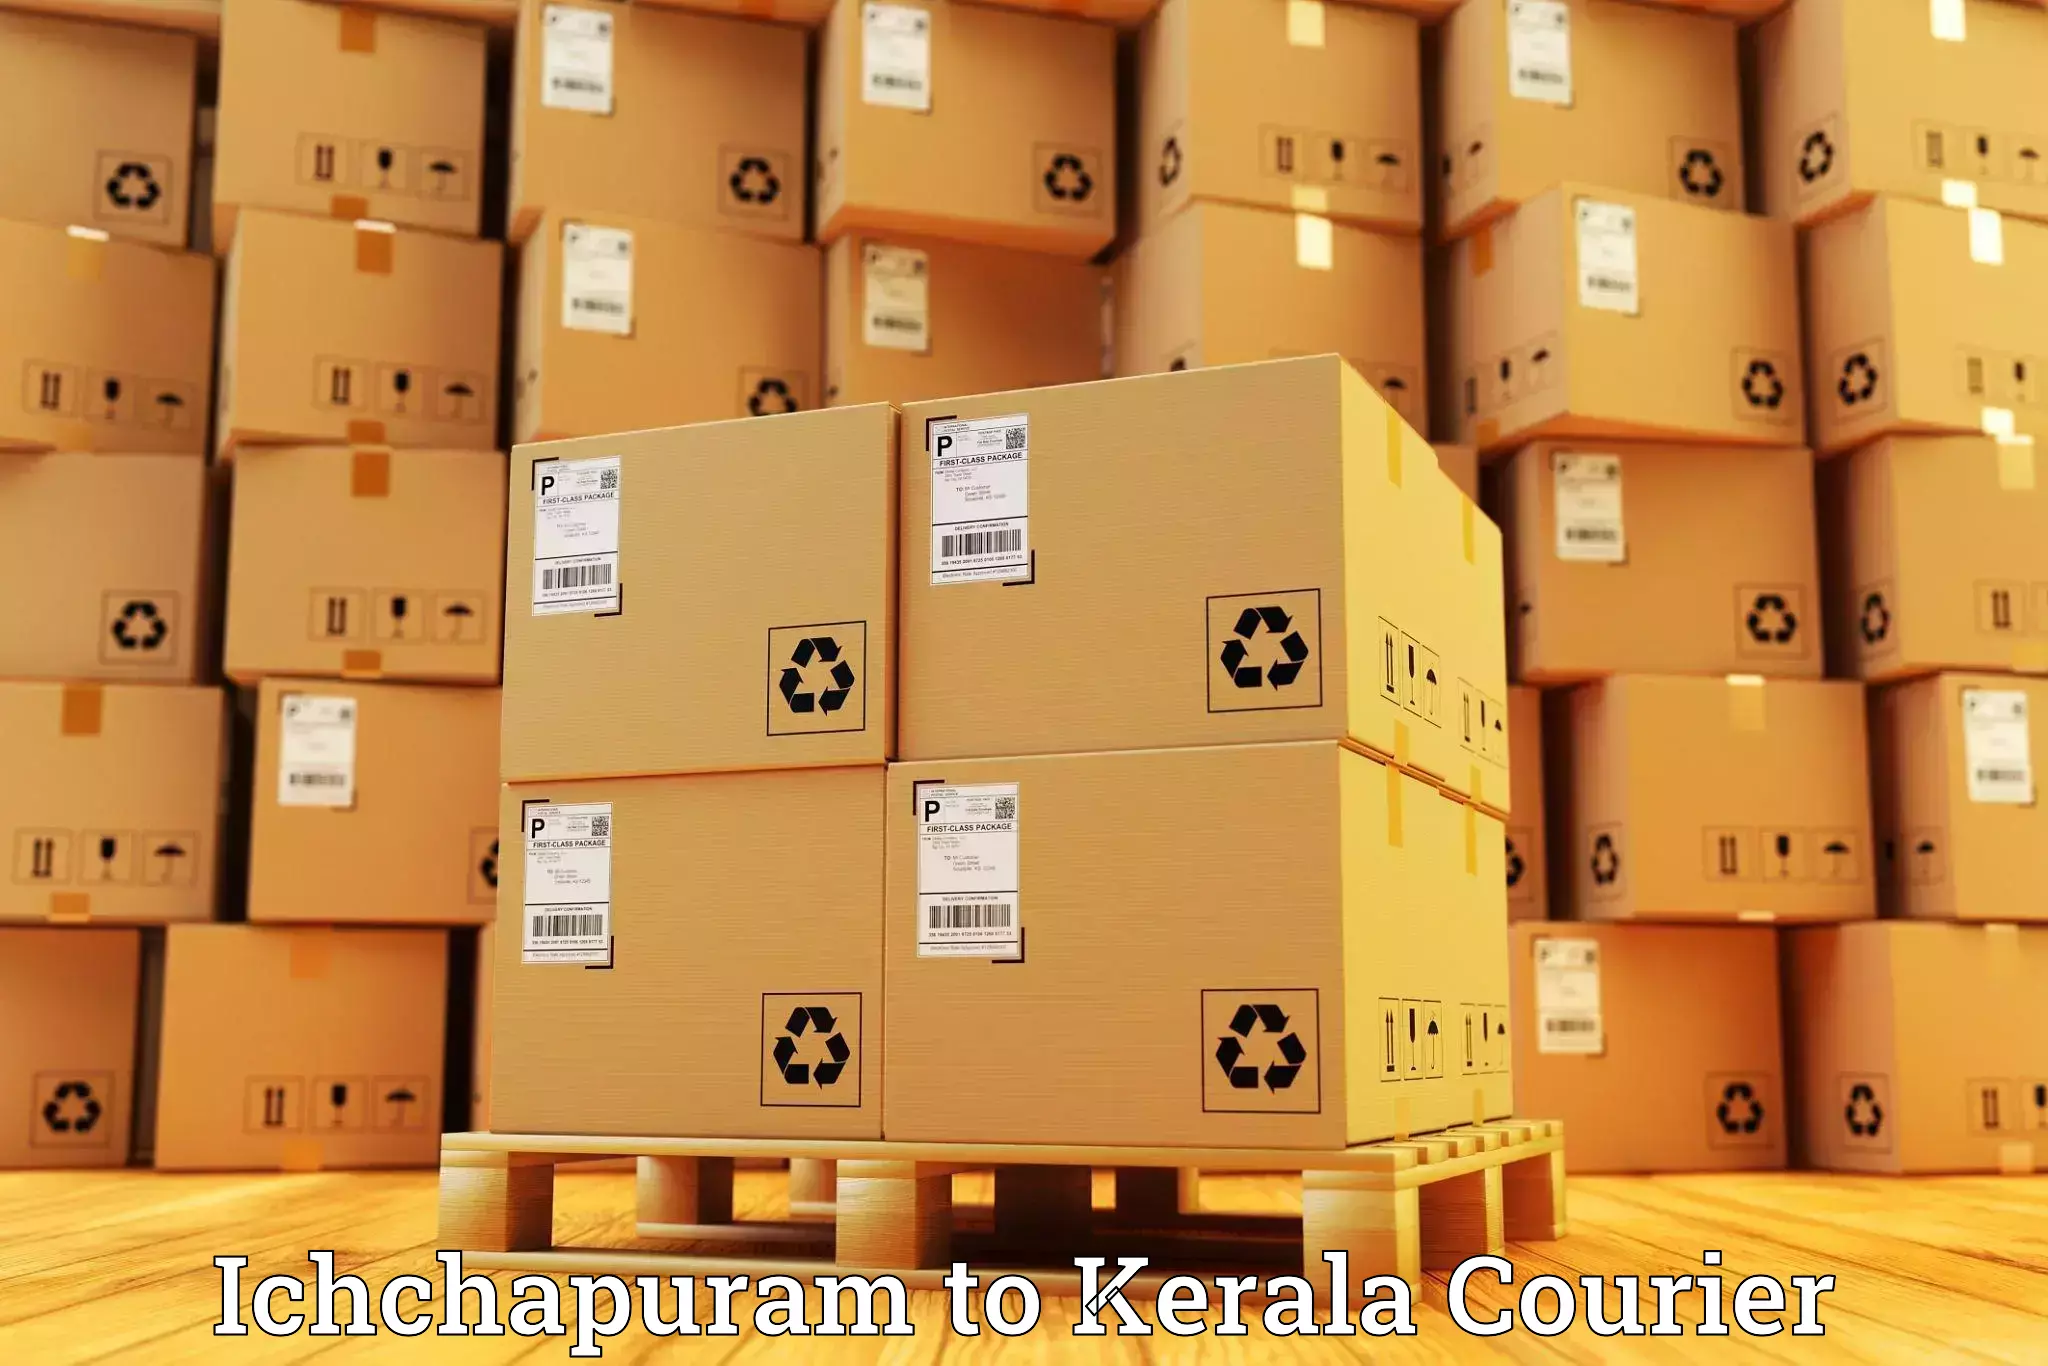 Express delivery capabilities Ichchapuram to Kozhikode